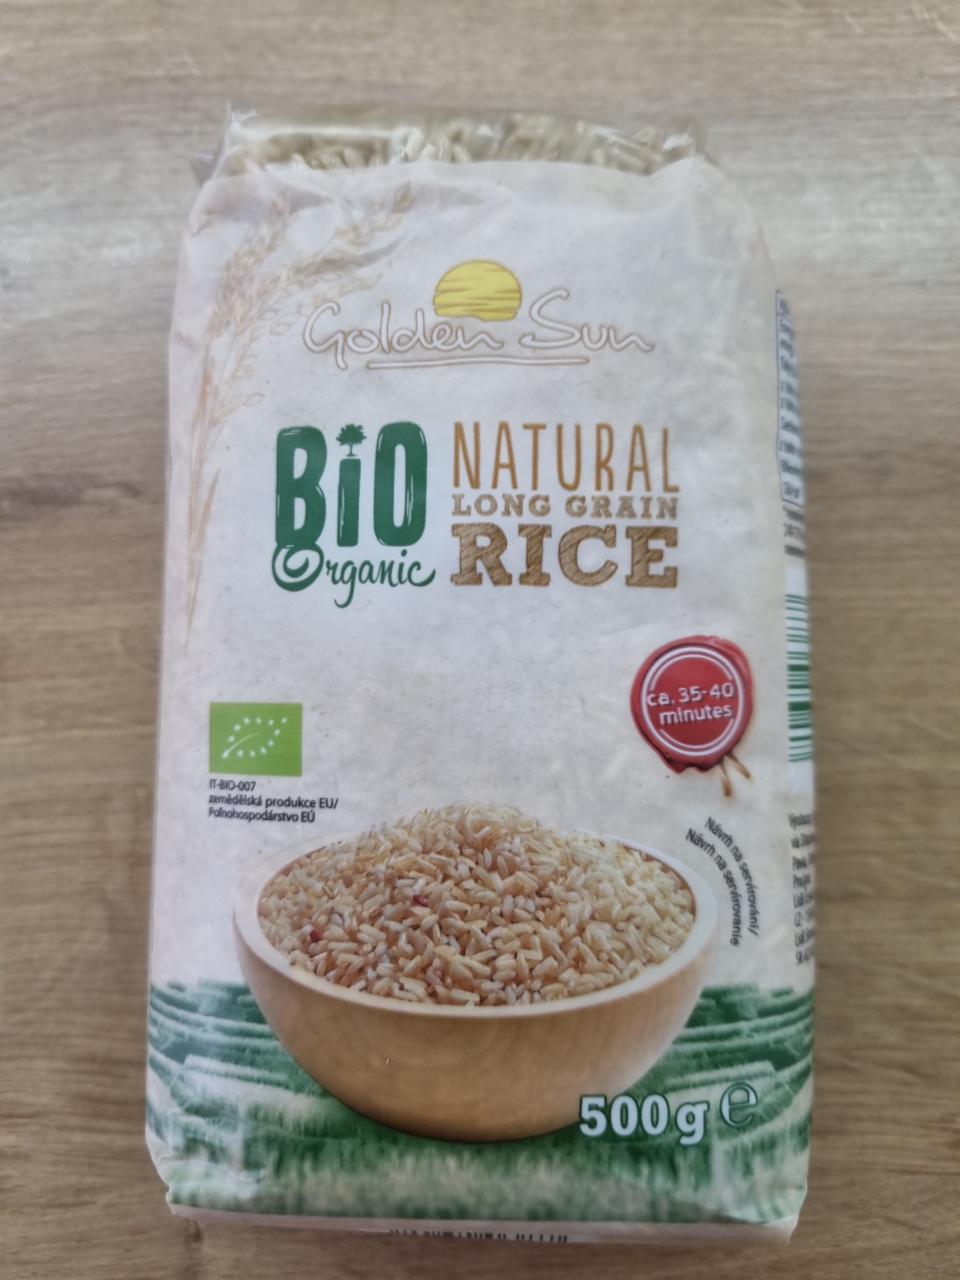 Képek - Bio natural long grain rice Golden sun